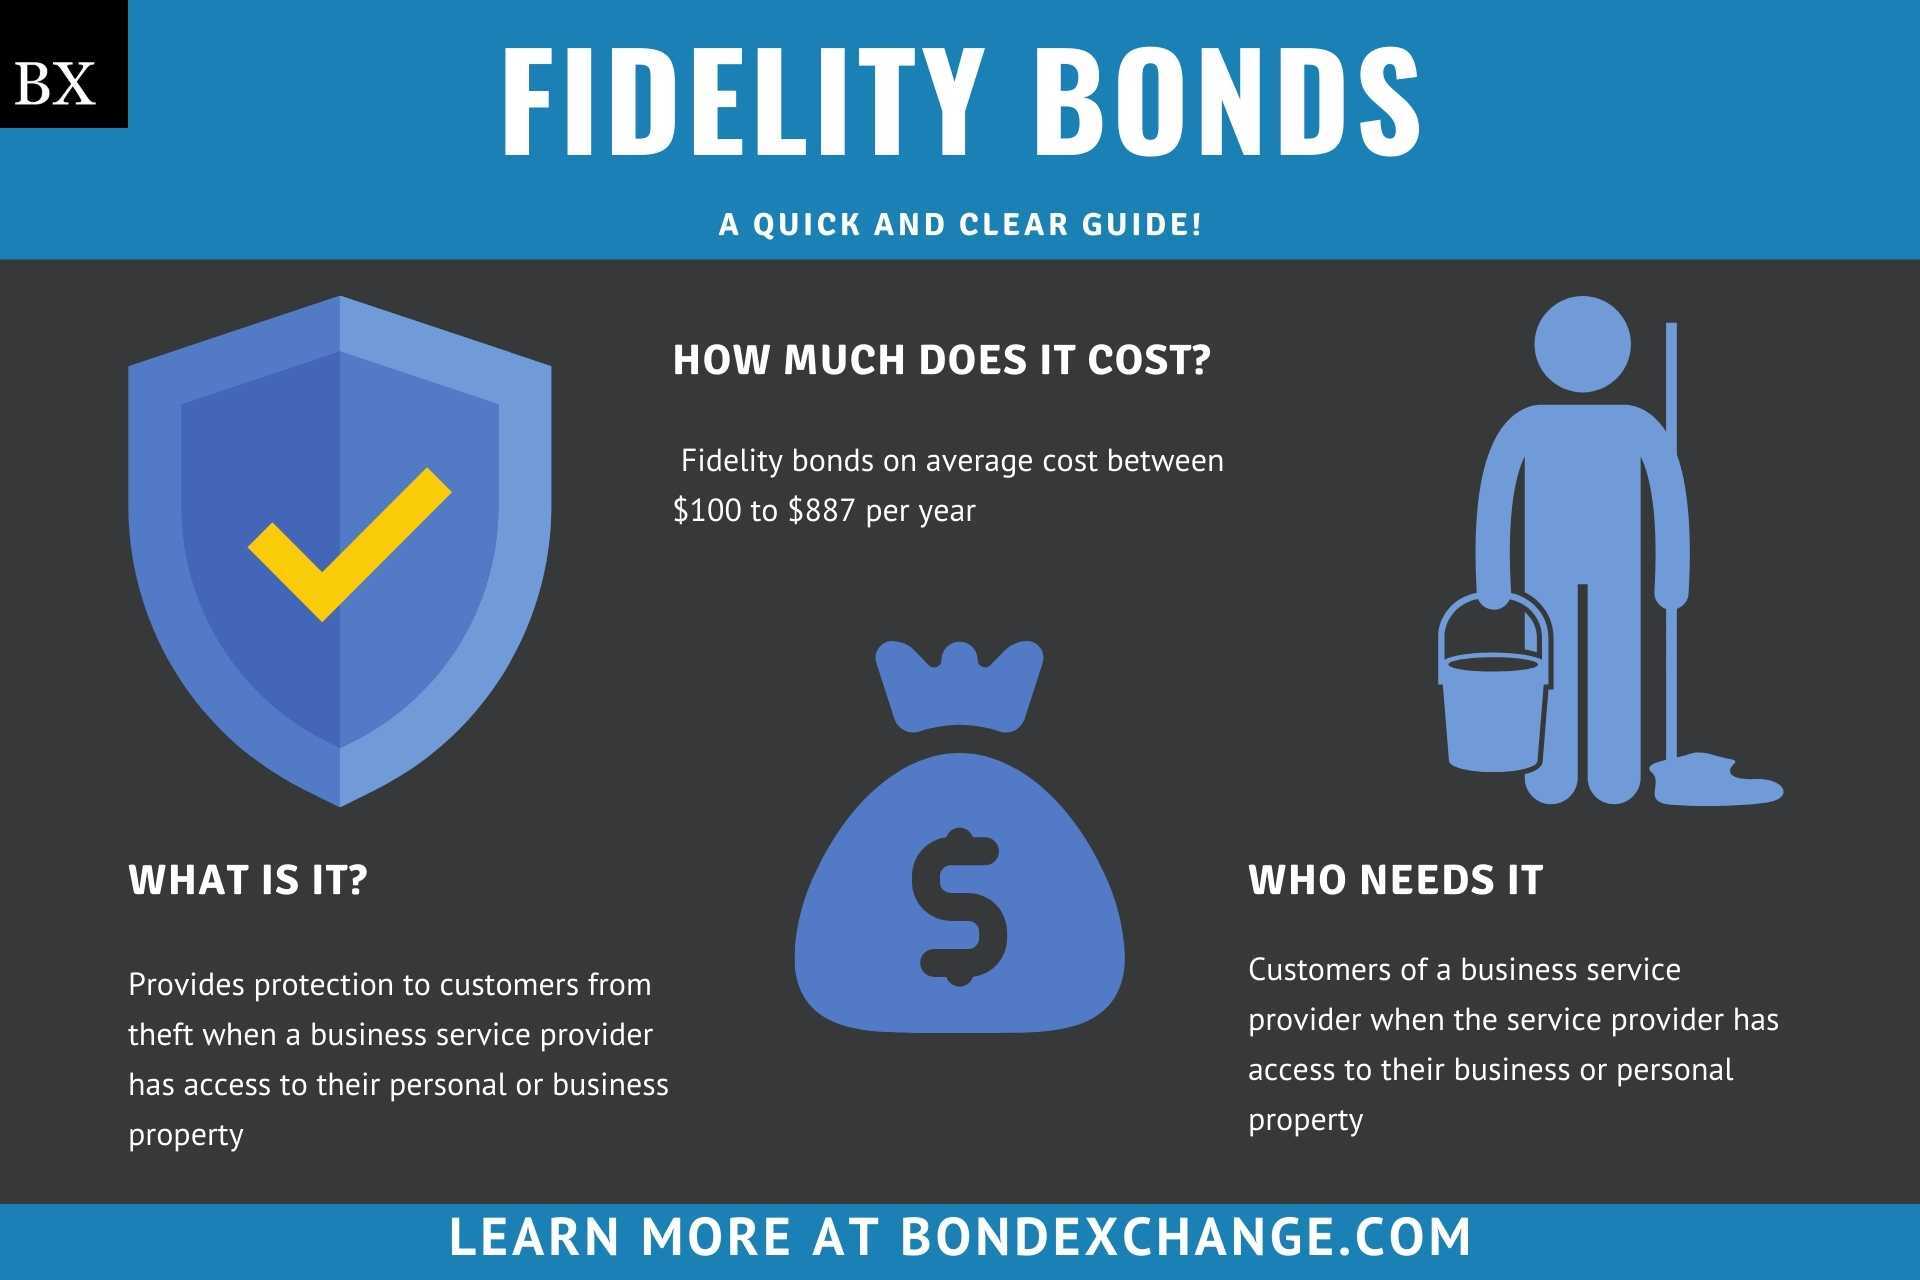 Fidelity Bond